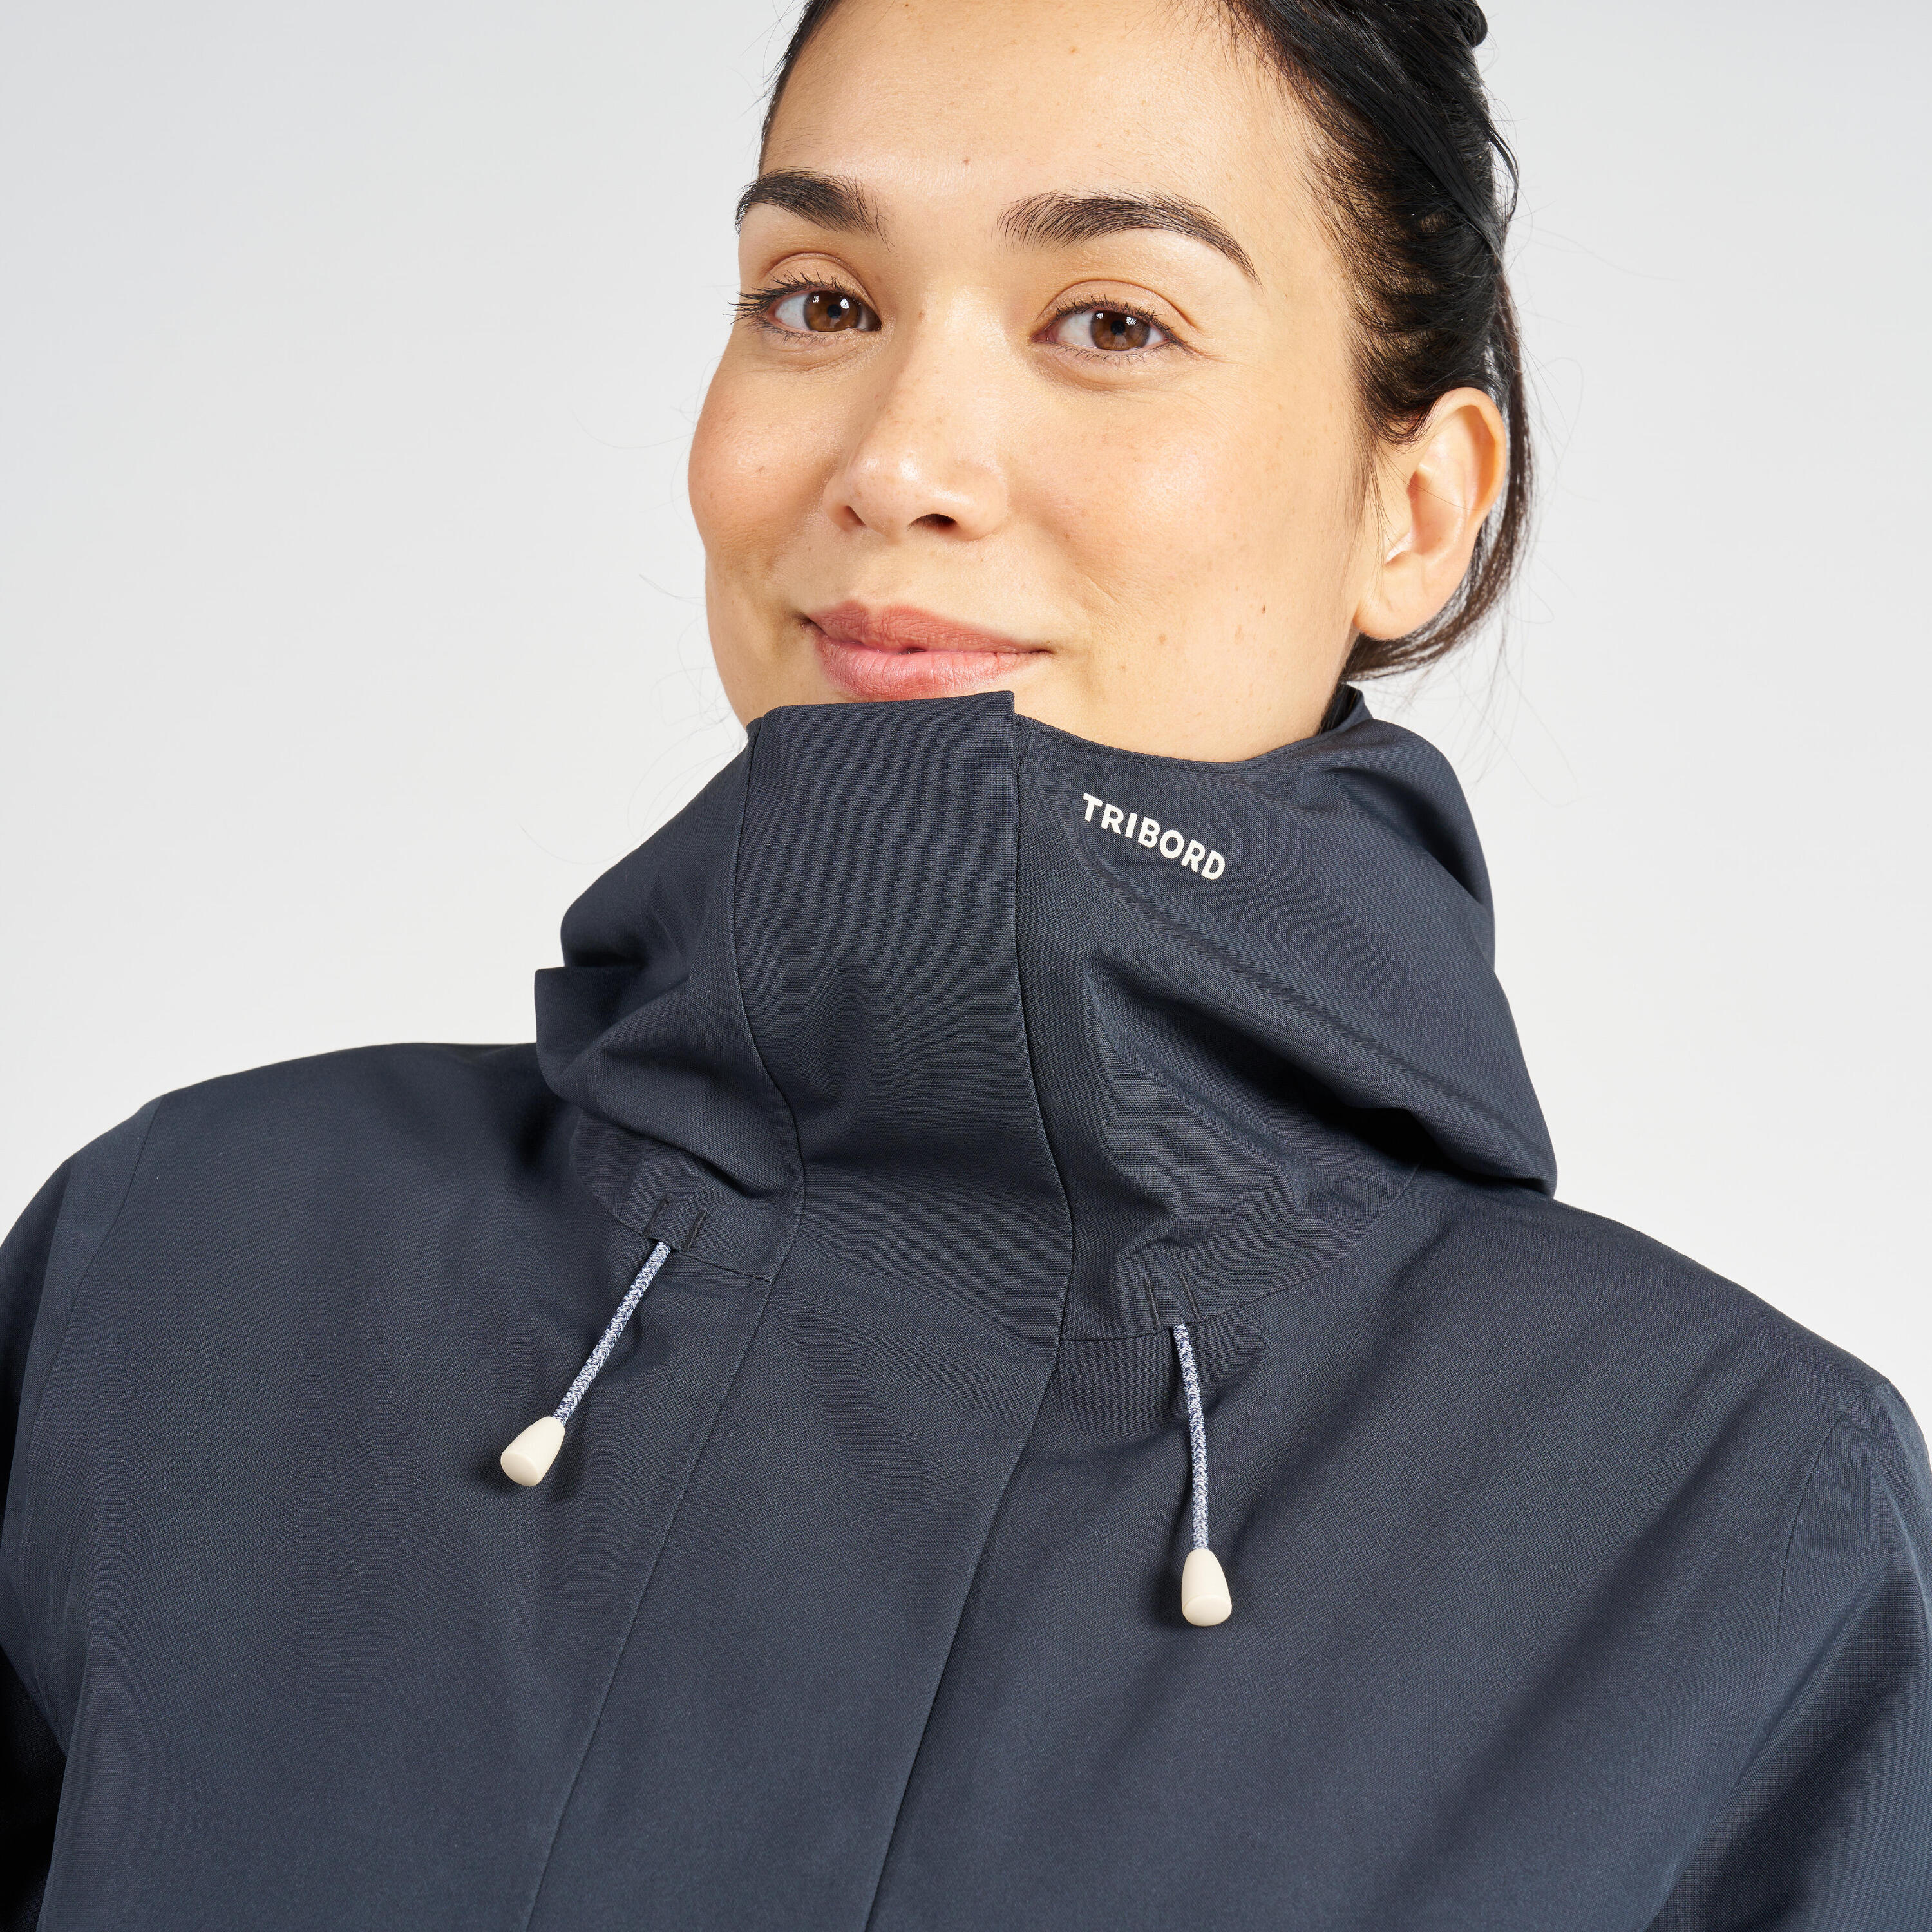 Women's Warm Waterproof Windproof Jacket SAILING 300 - Dark grey 5/13